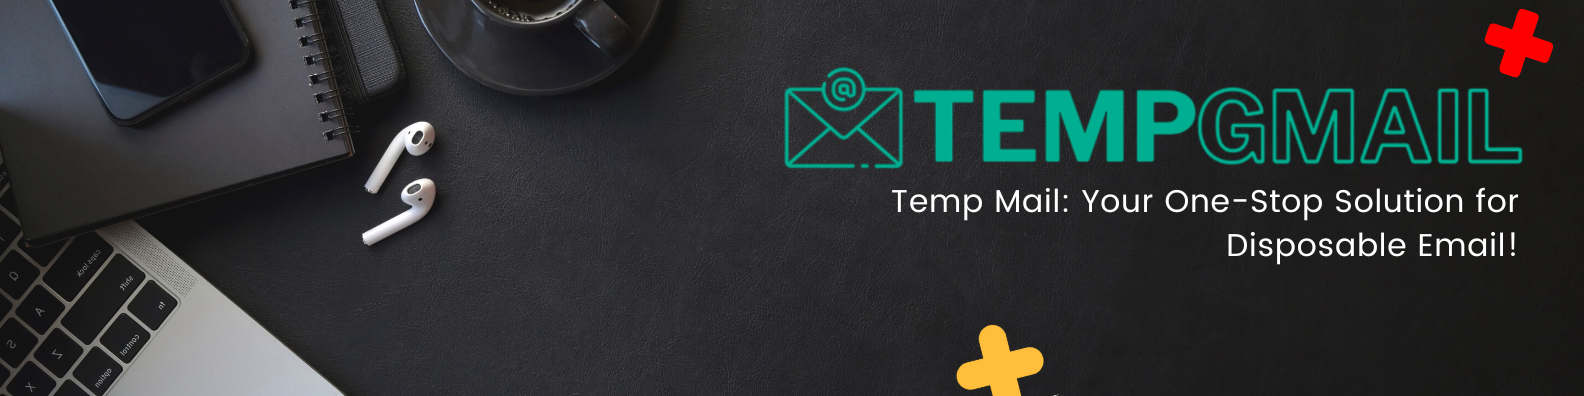 TempGmail.co Landing page